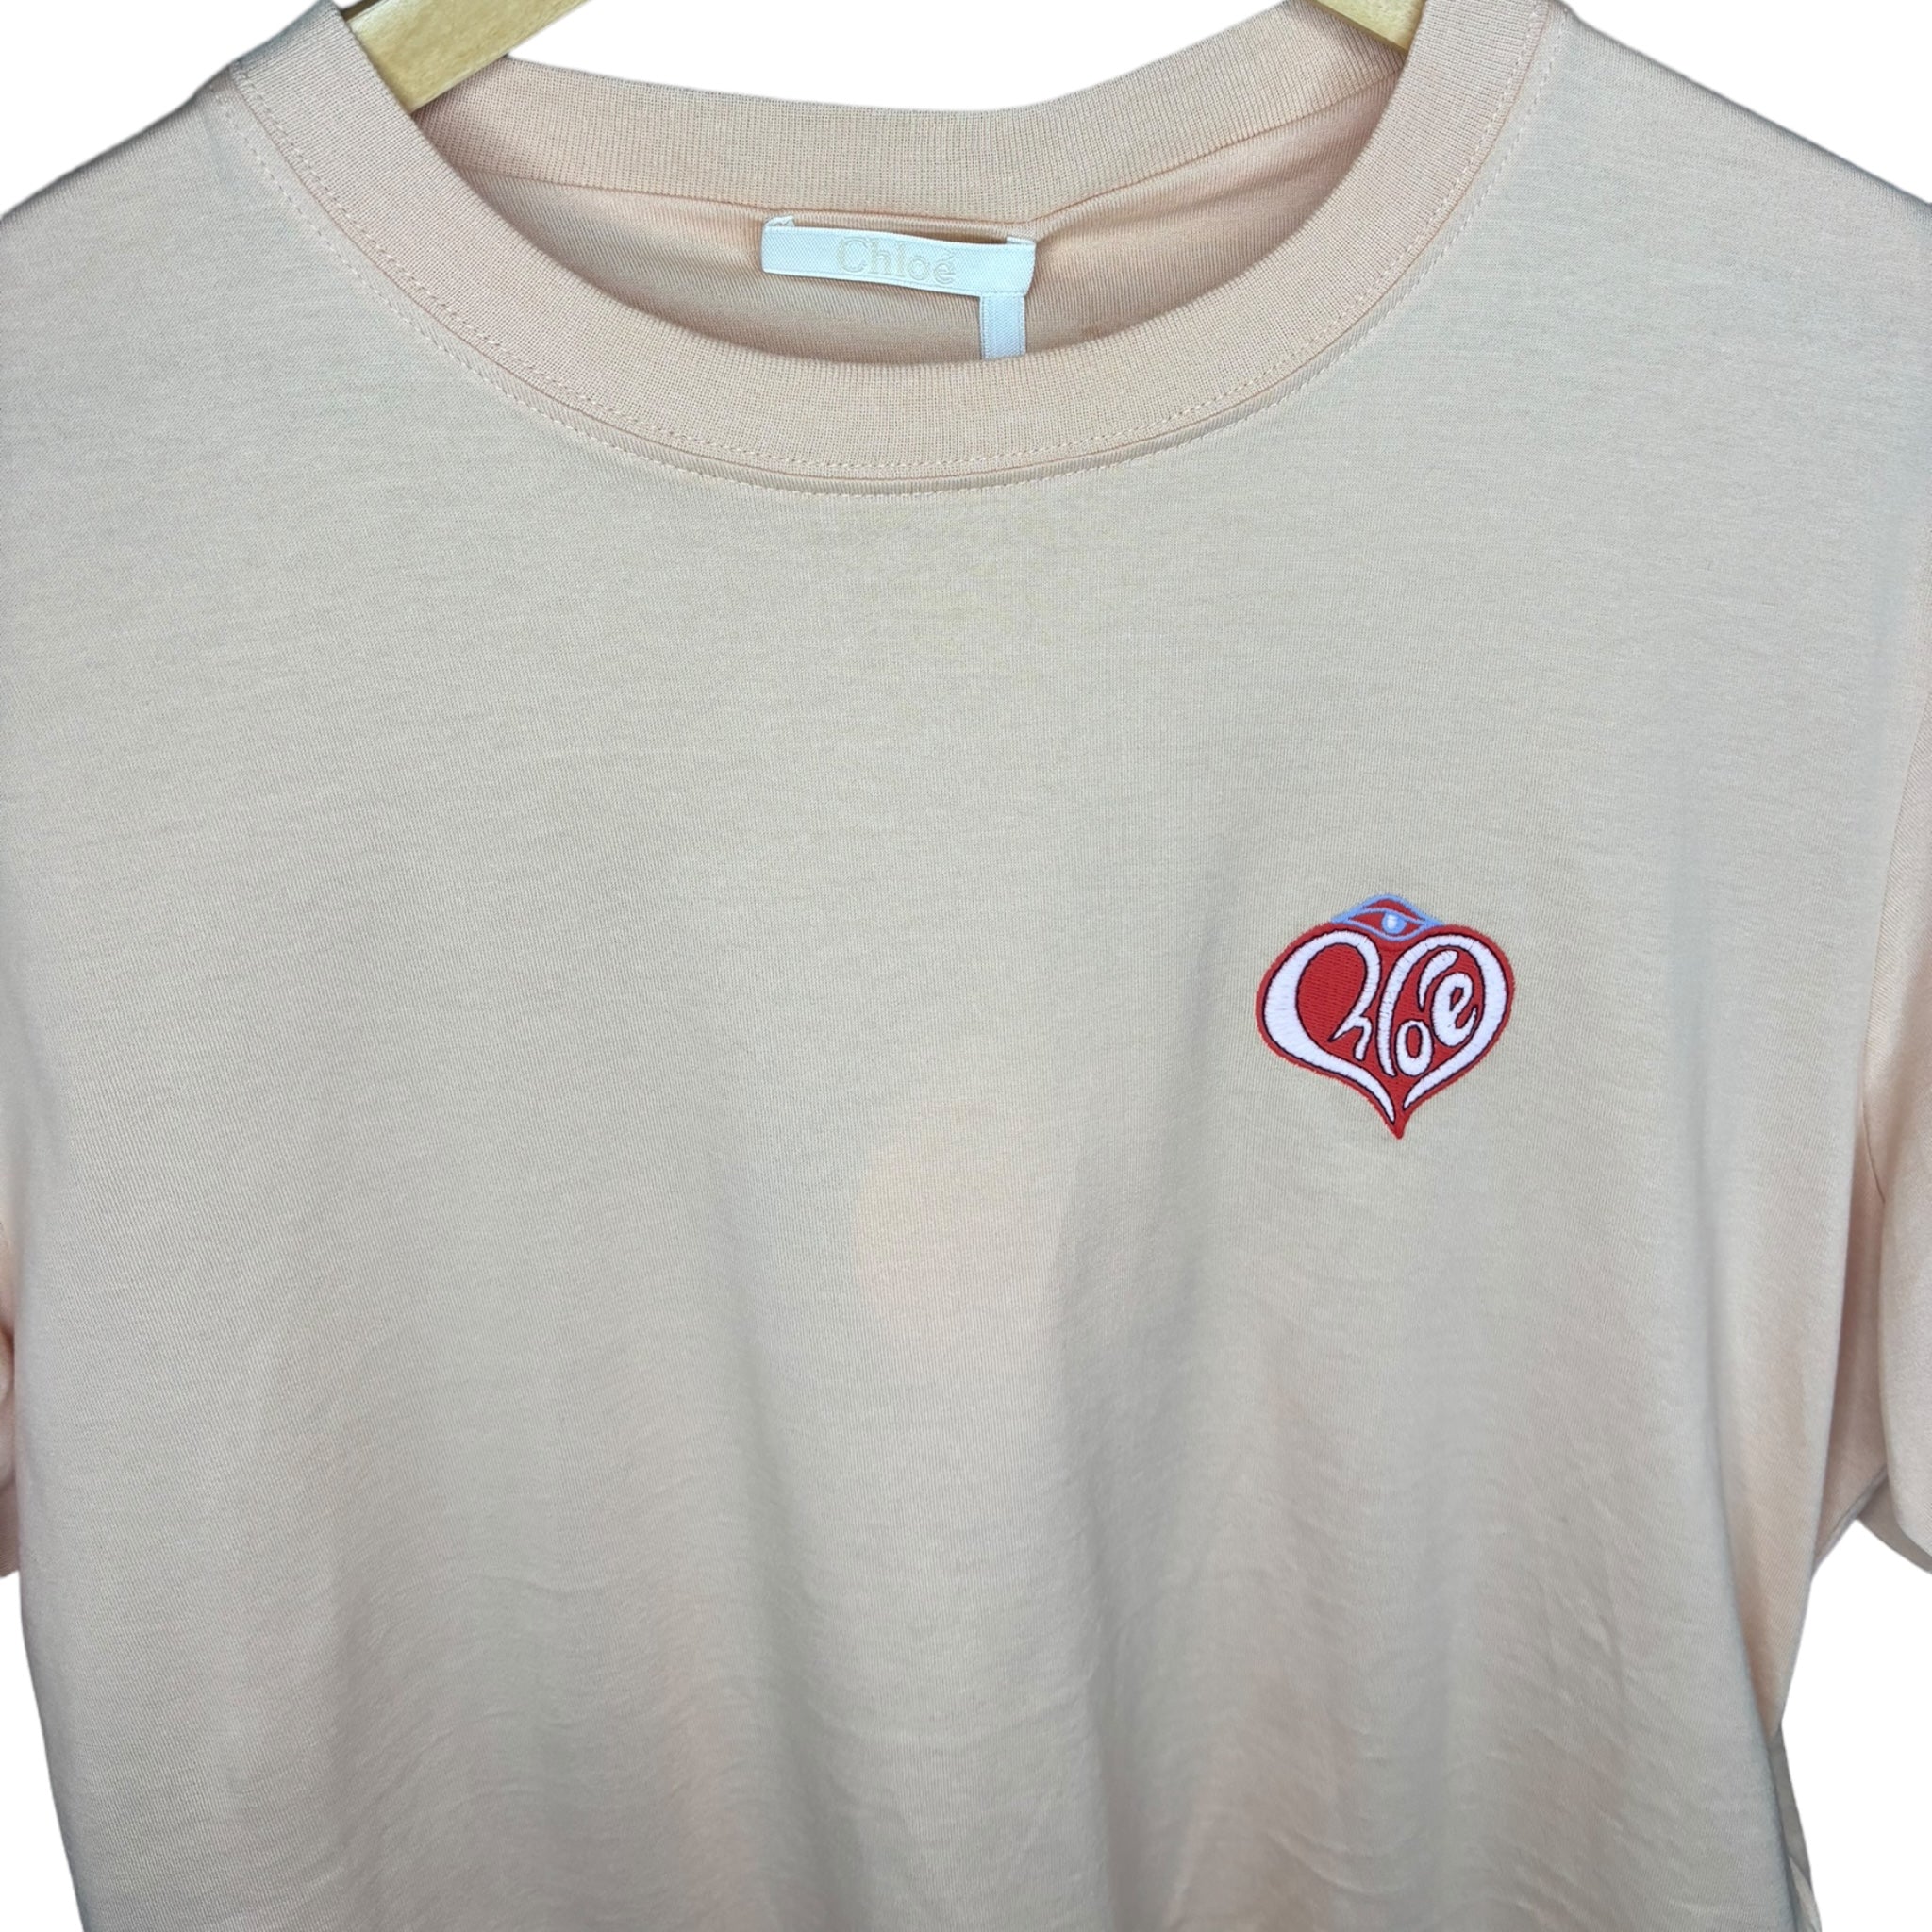 Chloe heart logo t shirt